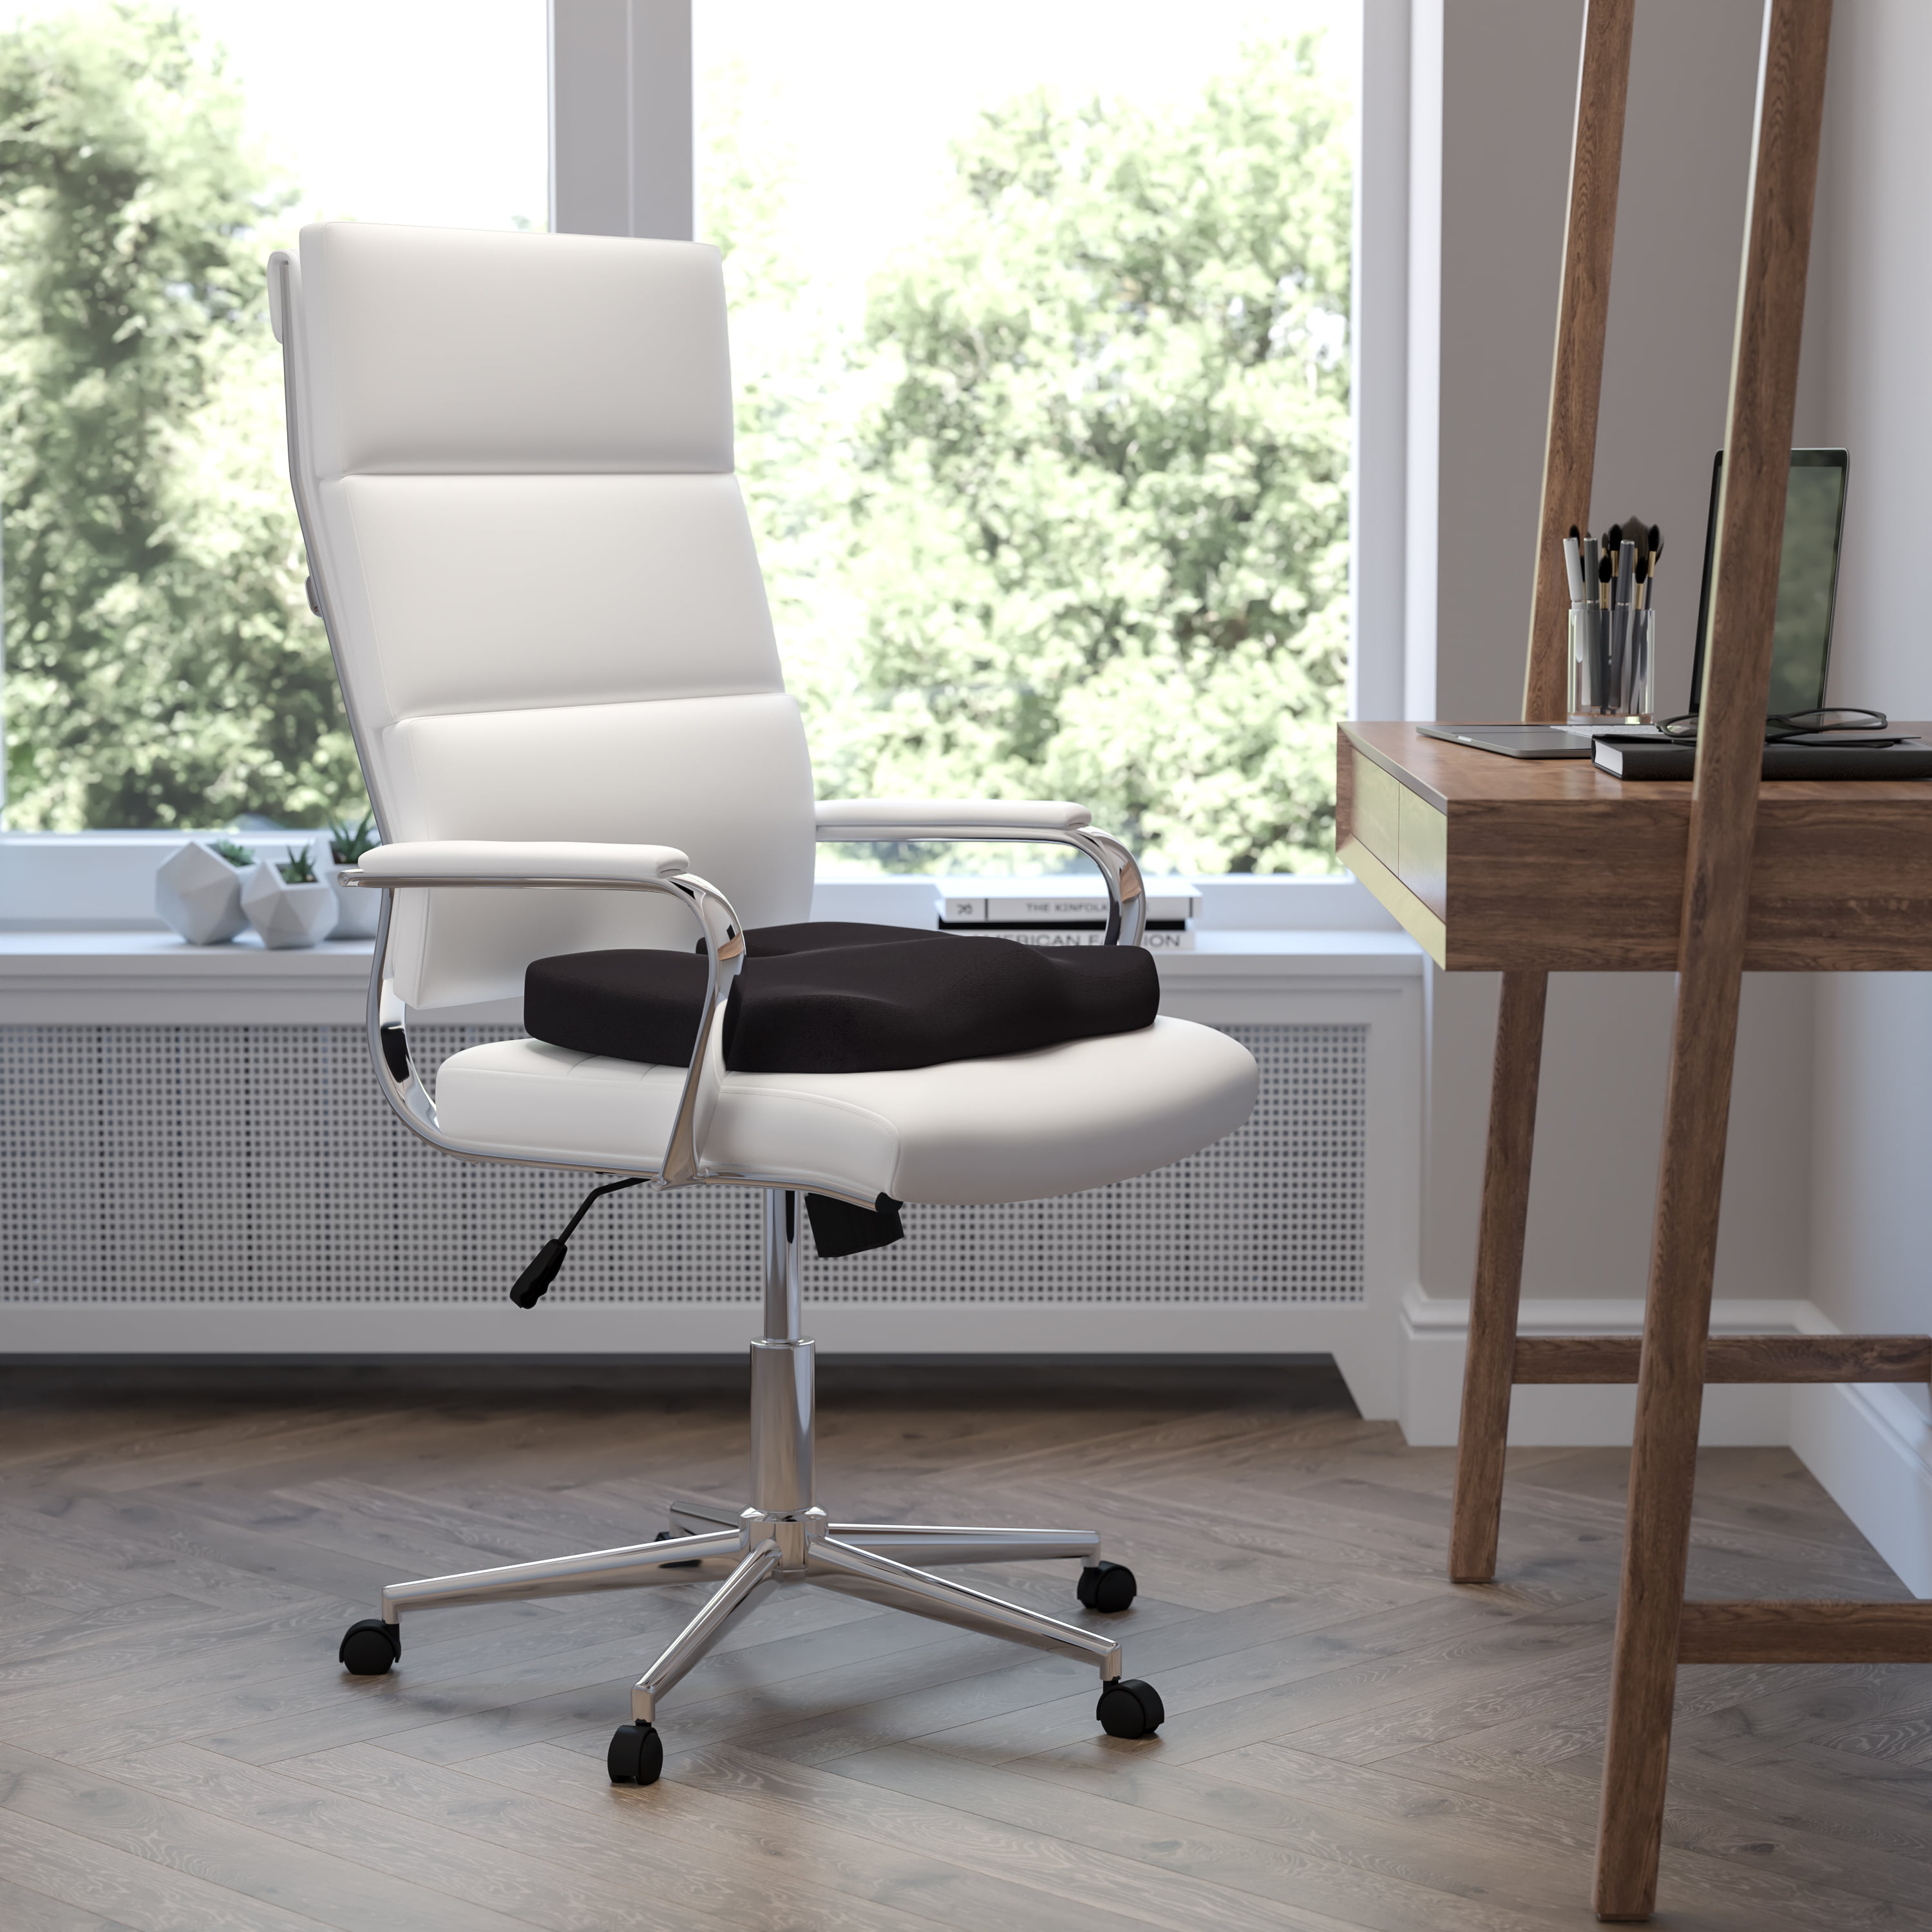 B3LMHCV HUISILK Seat Cushion for Office Chair - 100% Pure Memory